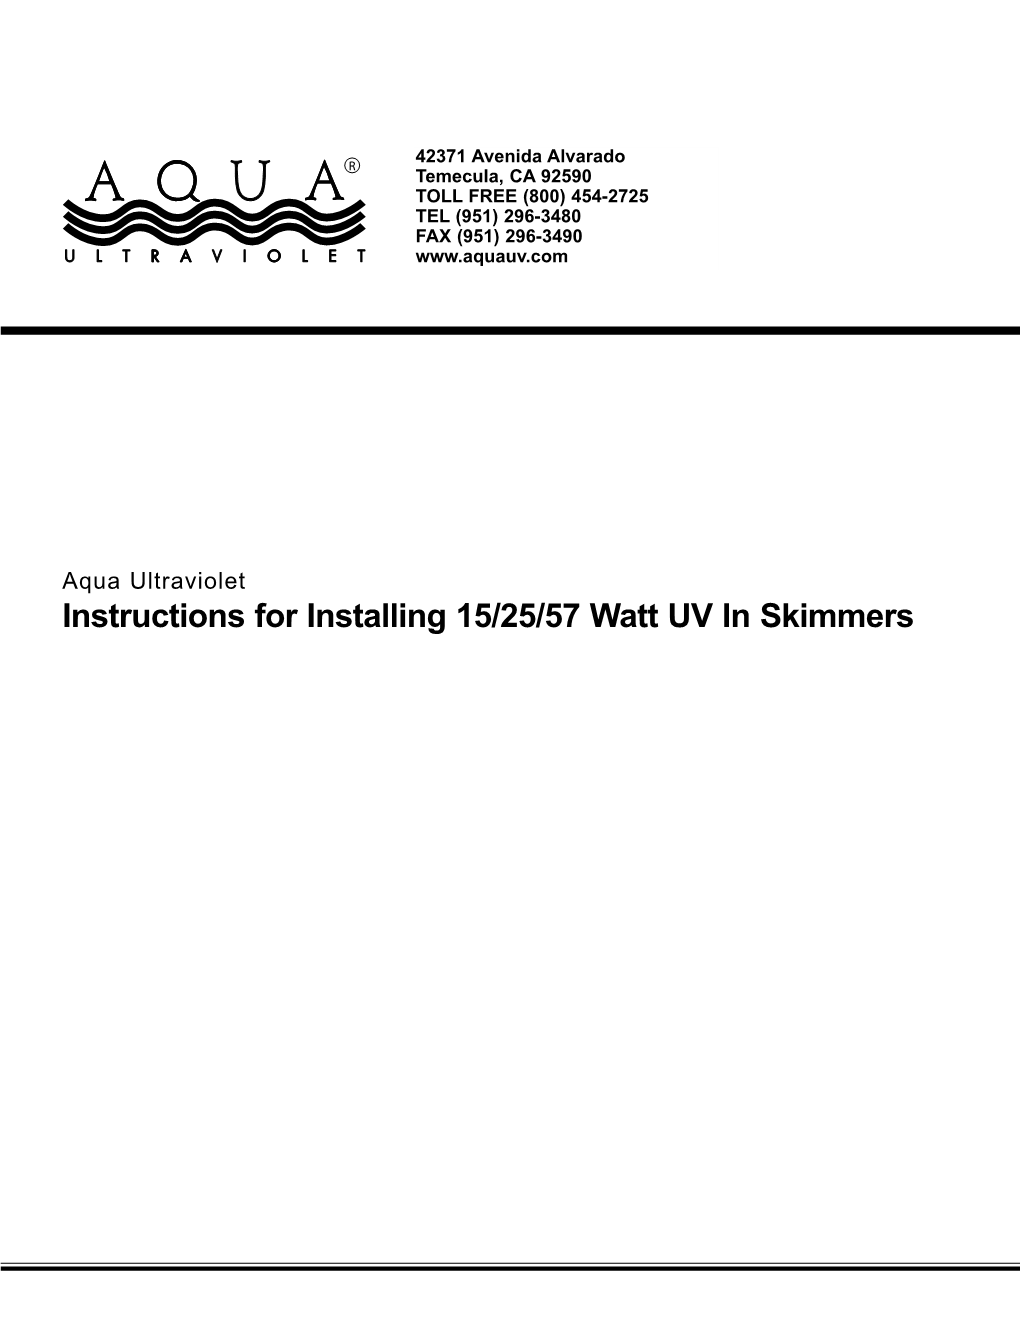 Instructions for Installing 15/25/57 Watt UV in Skimmers